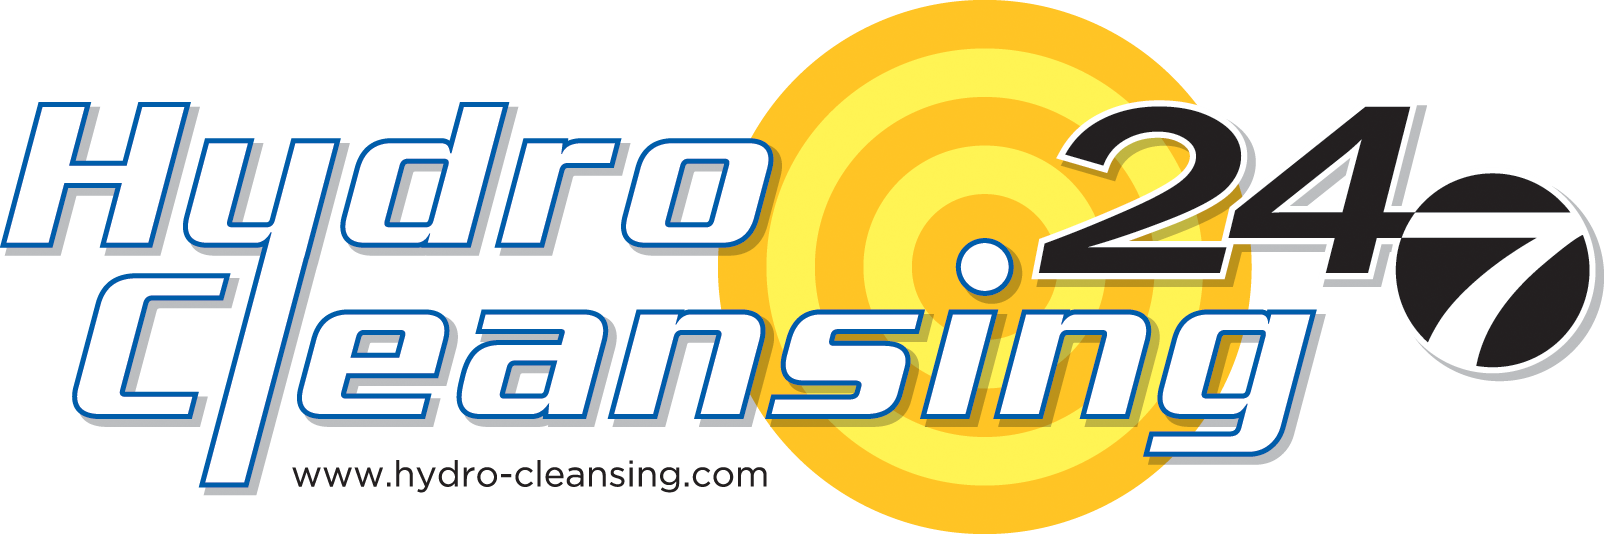 Hydro-Cleansing Ltd